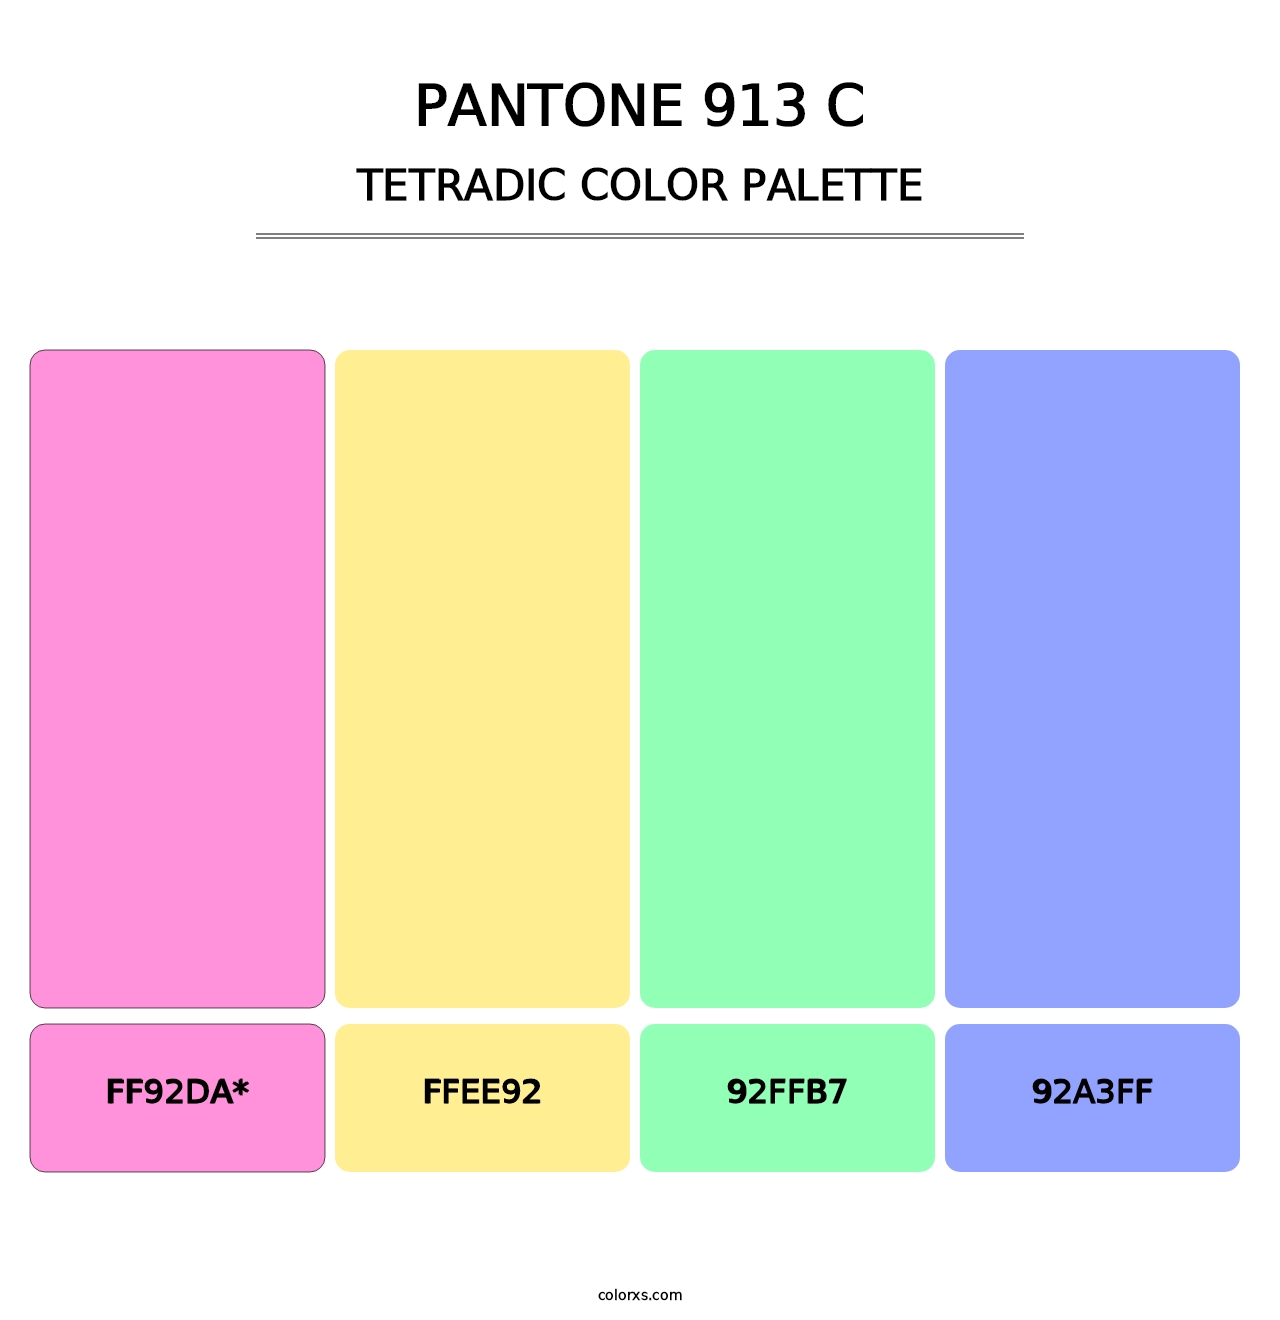 PANTONE 913 C - Tetradic Color Palette